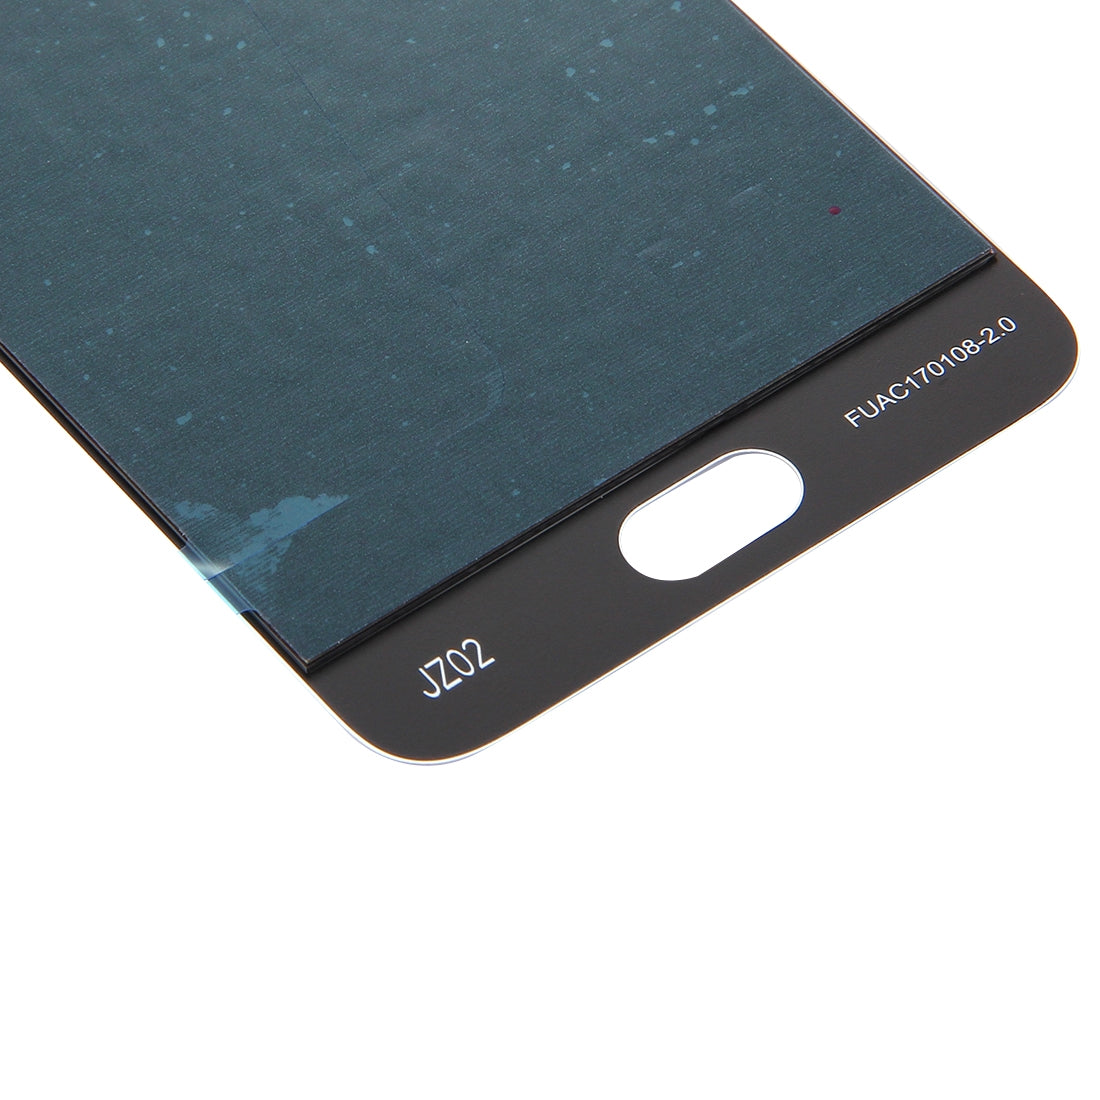 Ecran LCD + Vitre Tactile Meizu Pro 6S Blanc